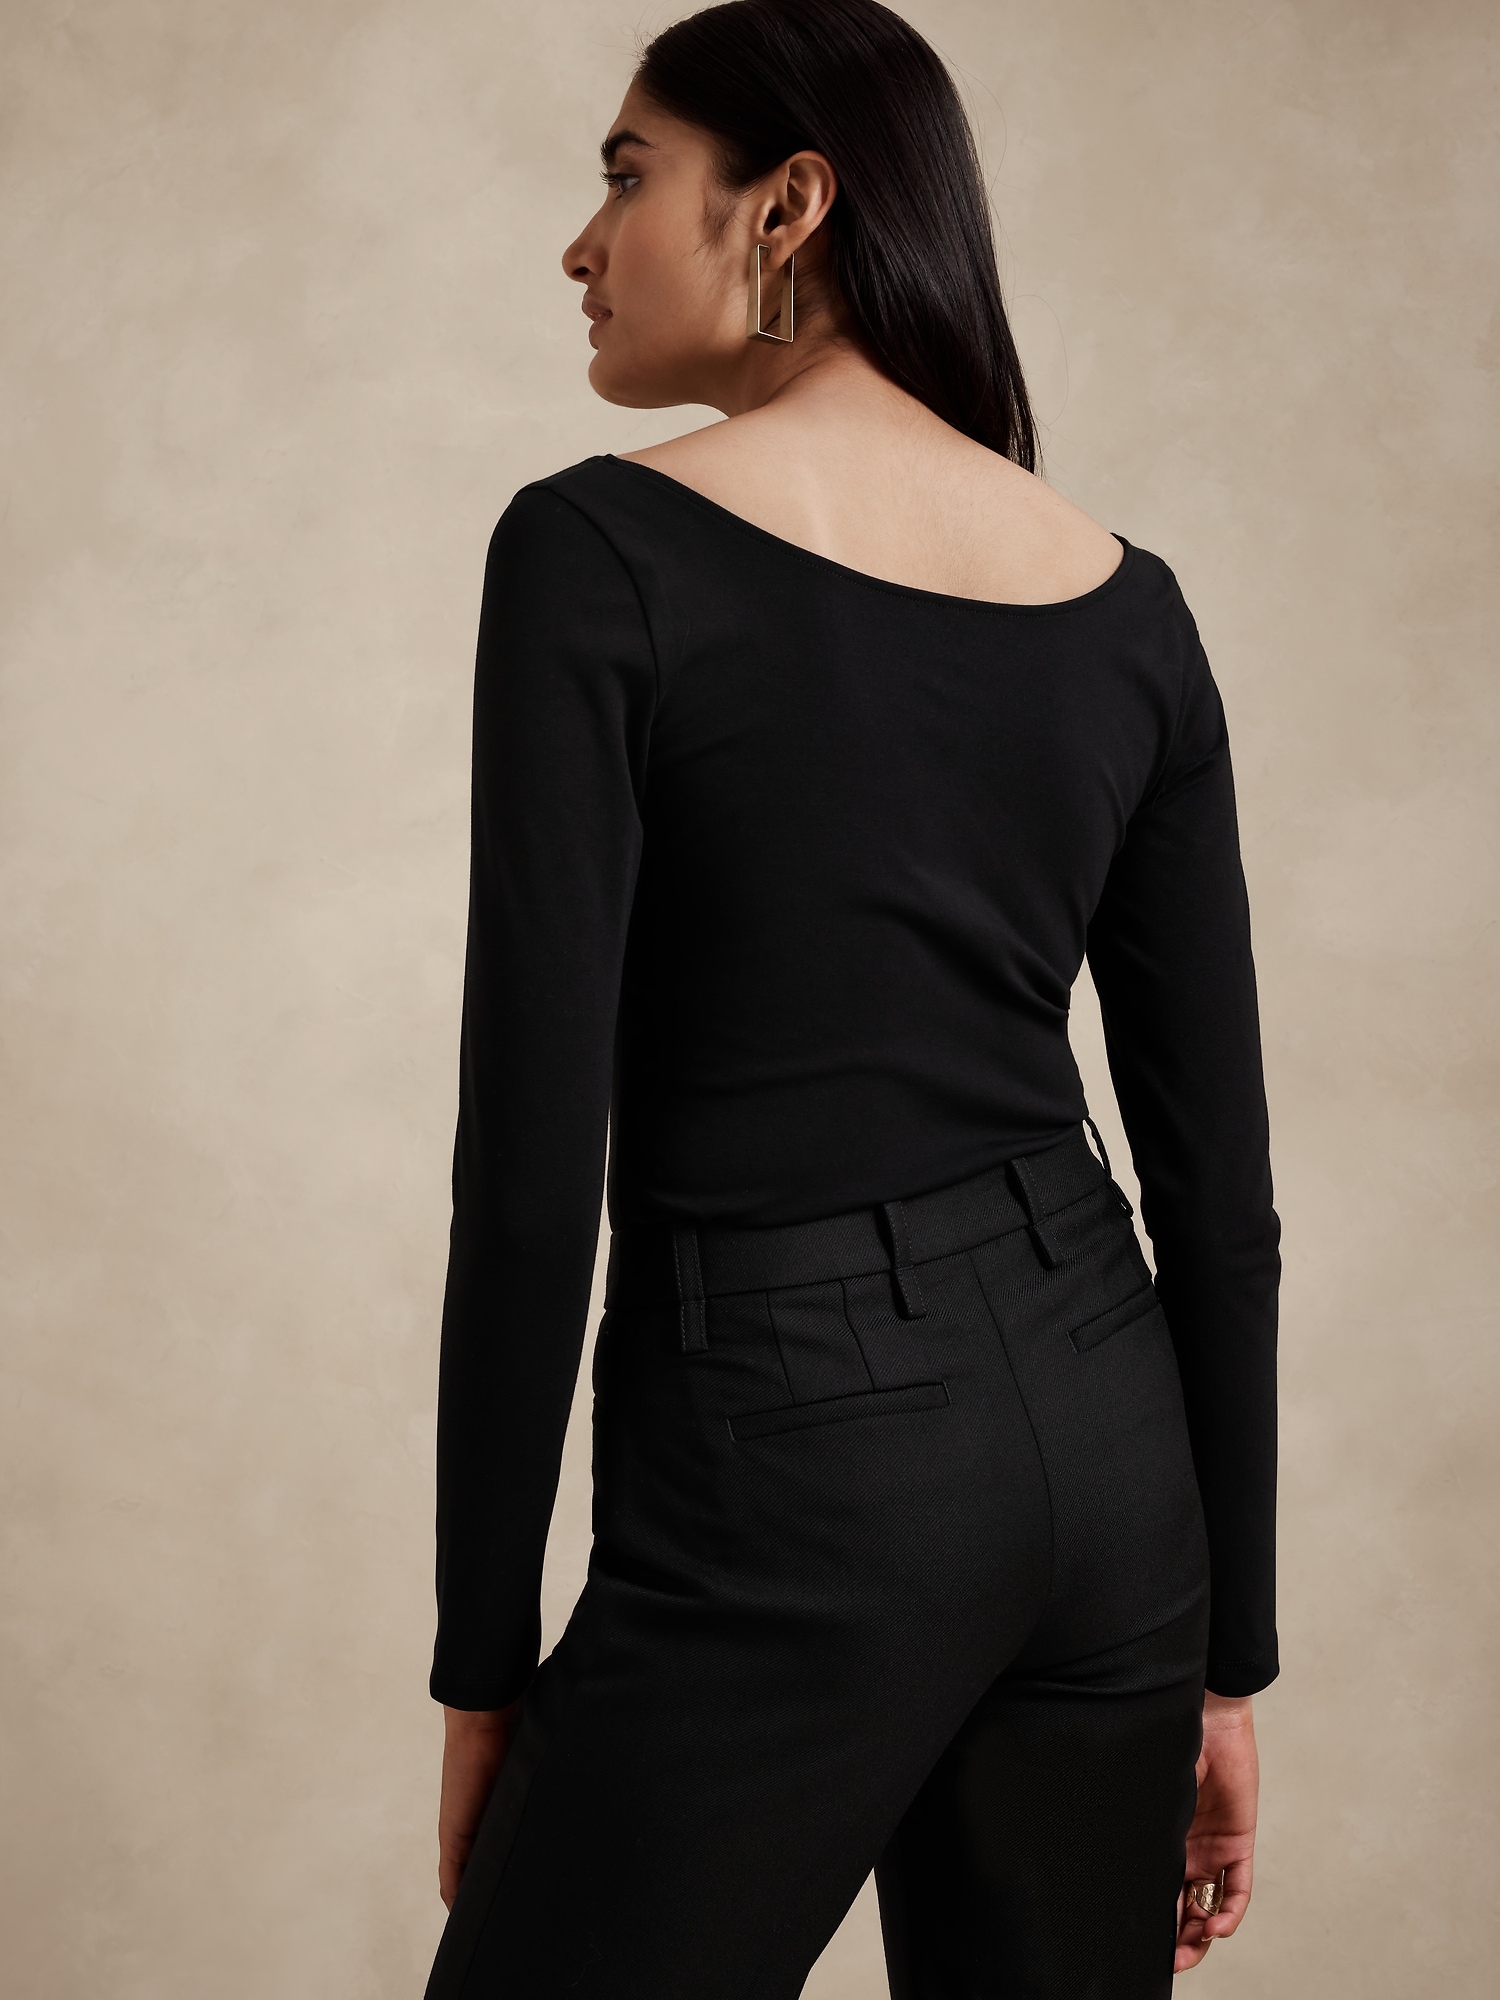 MANGDIUP Women's Size Large Black Scoop Neck T- Shirt Basic